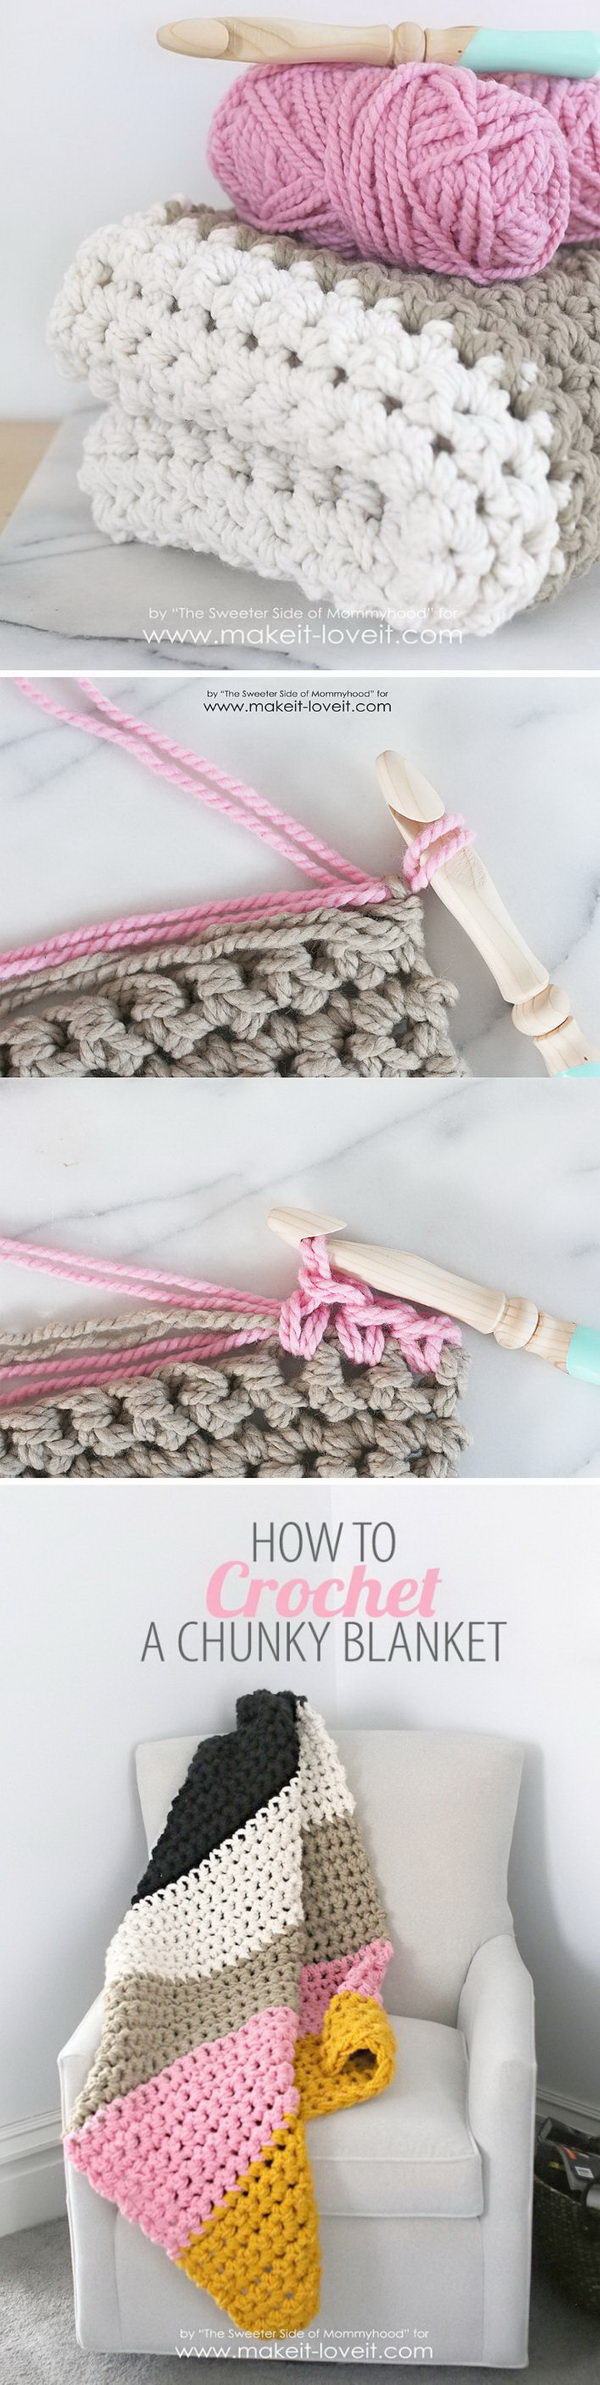 Quick And Easy Crochet Blanket Patterns For Beginners: Chunky Crochet Blanket. 